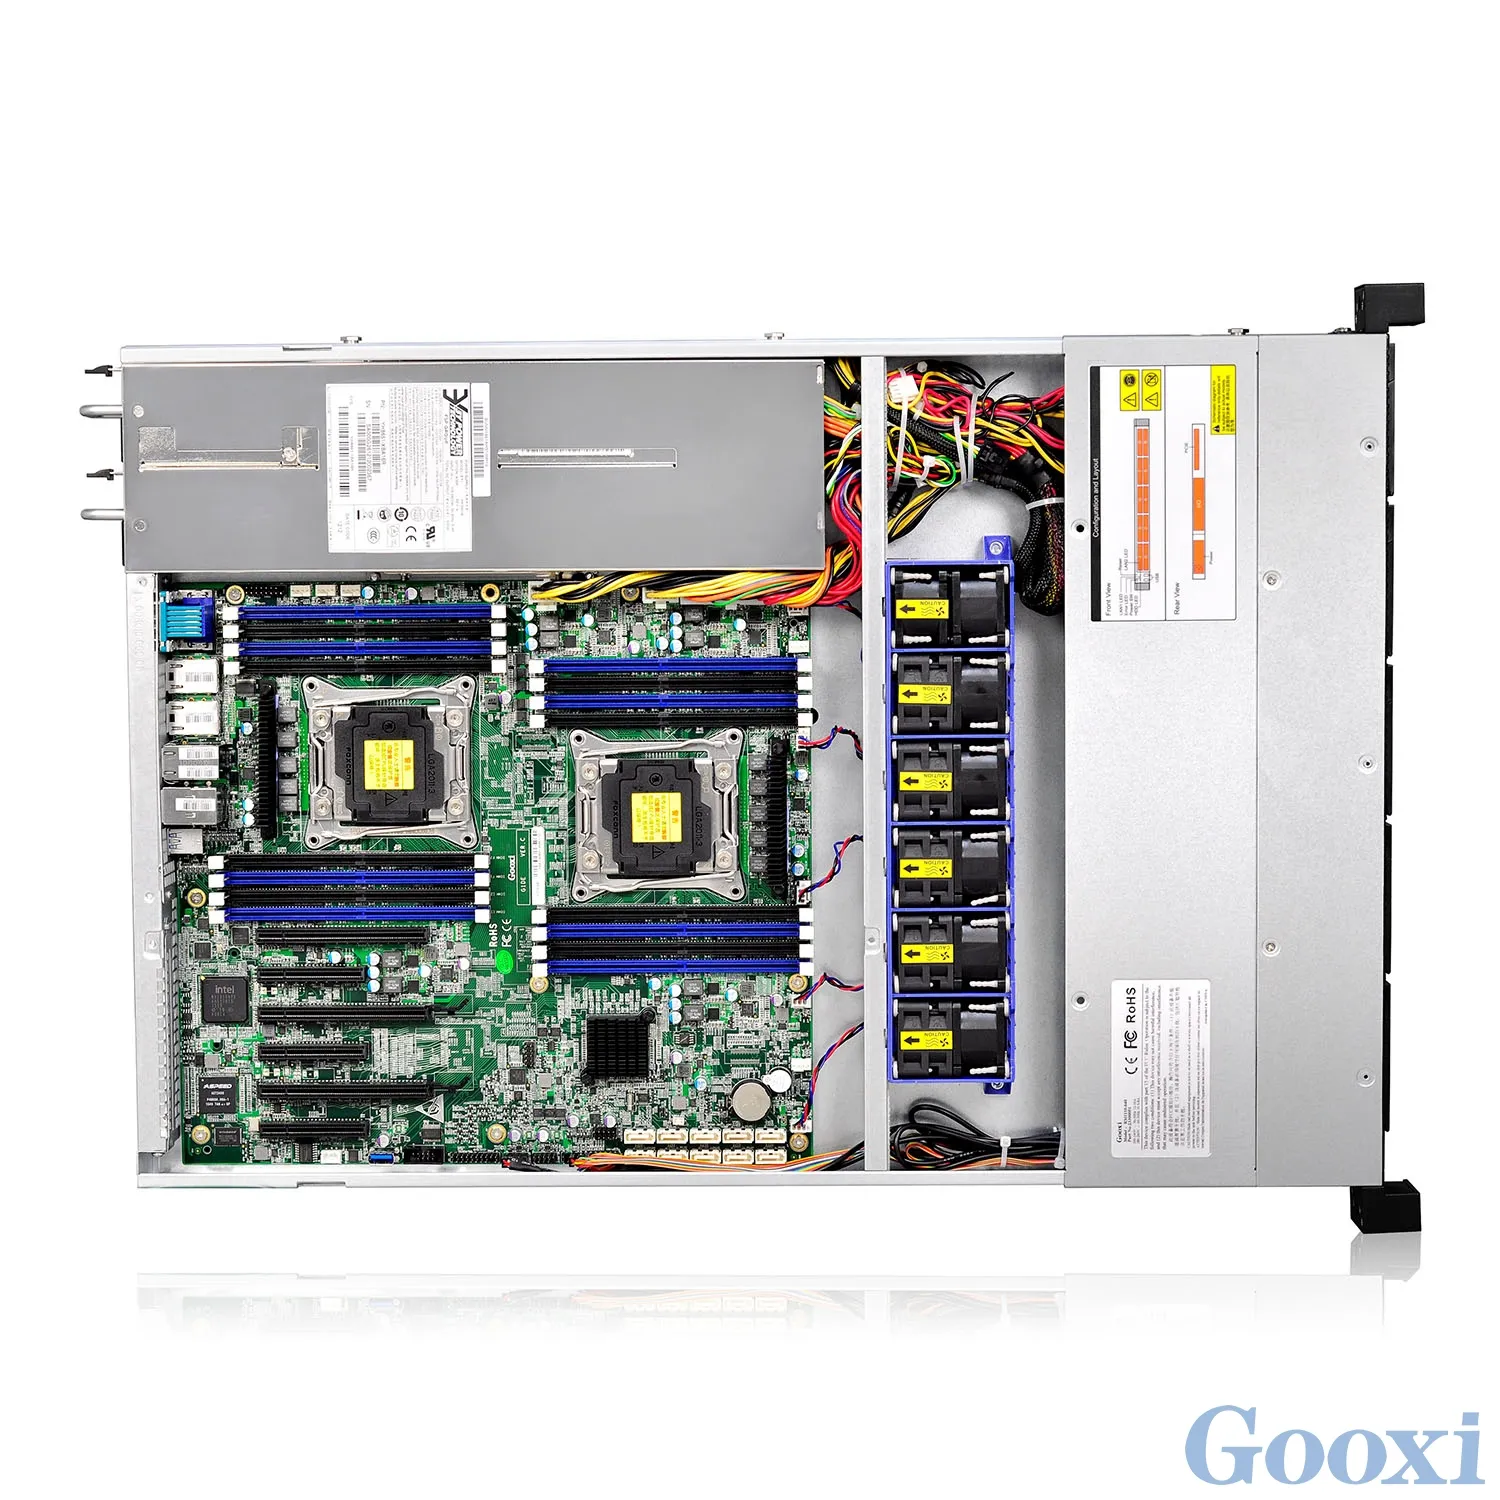 Gooxi 1U 4 מפרצים rackmount שרת 12 Gb/s SAS פסיבי לוח אם עם SGPIO, SAS HDD